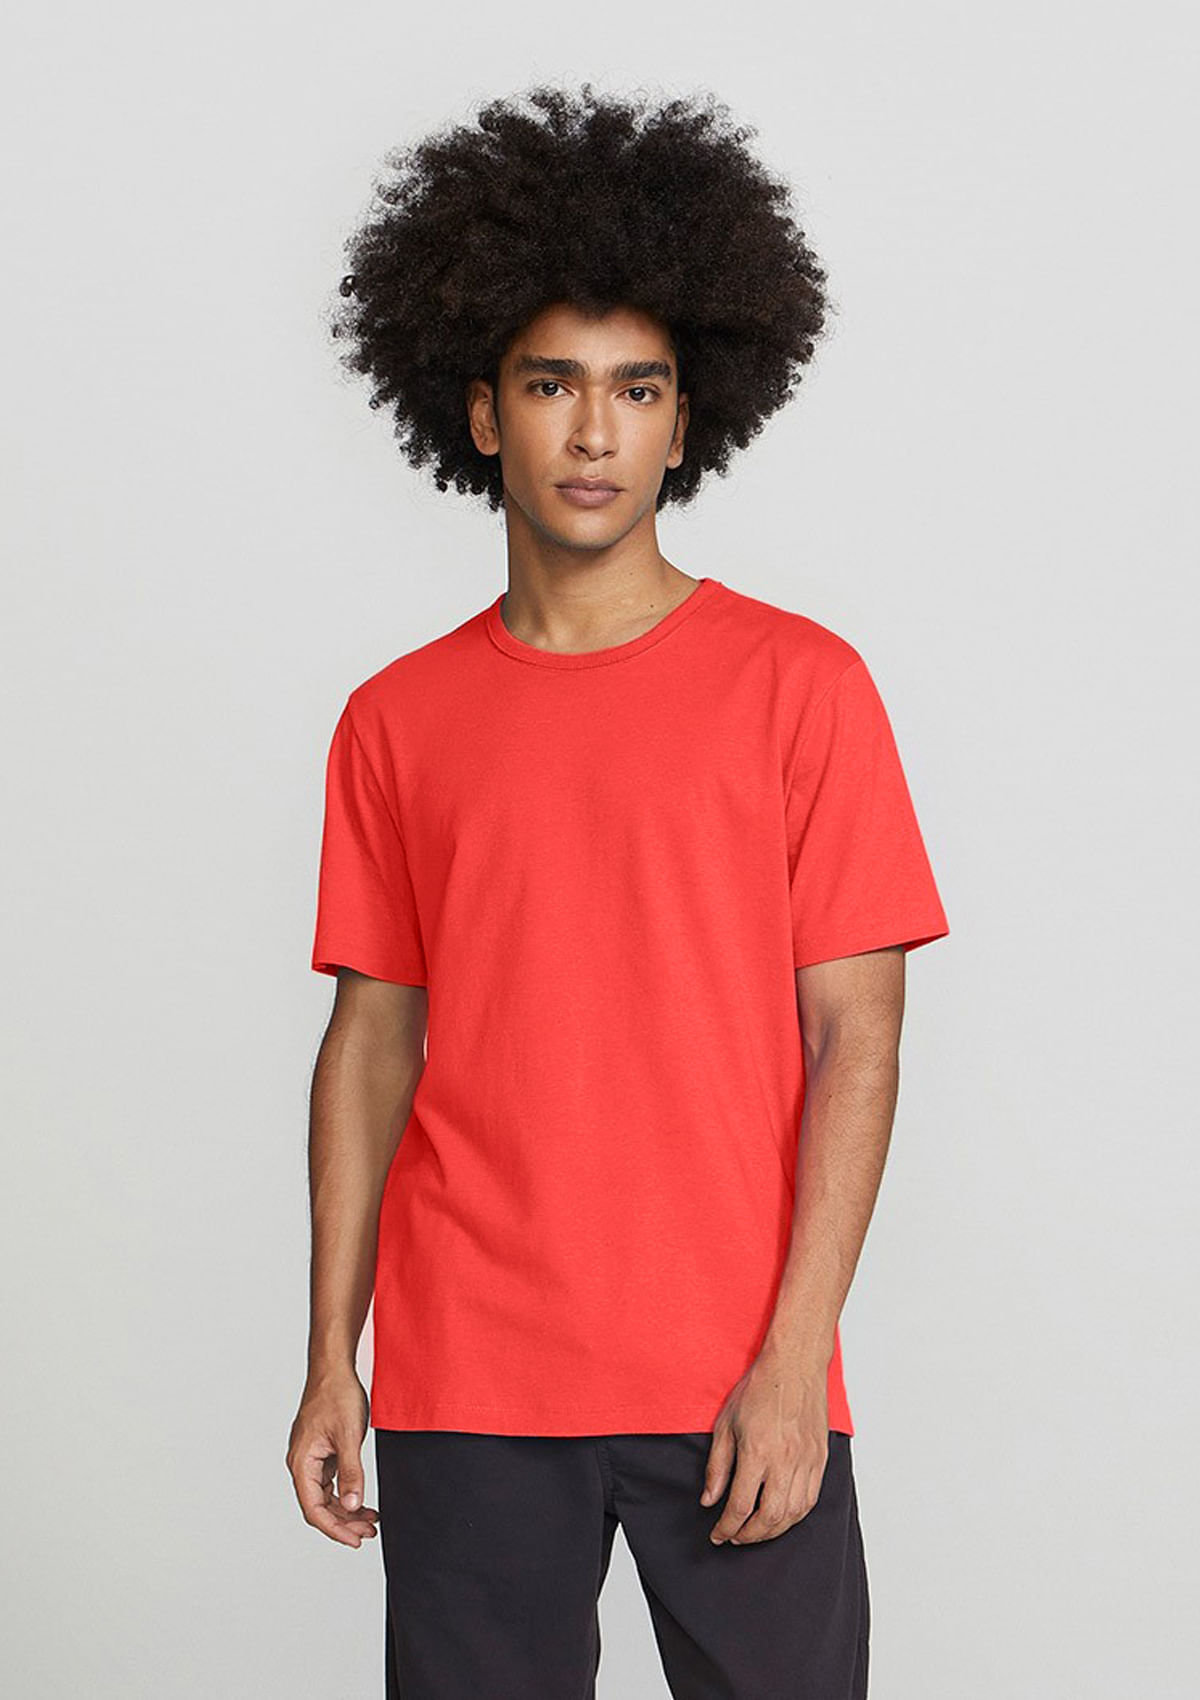 Camiseta Básica Masculina Manga Curta Slim - Vermelho Tam XP HERING